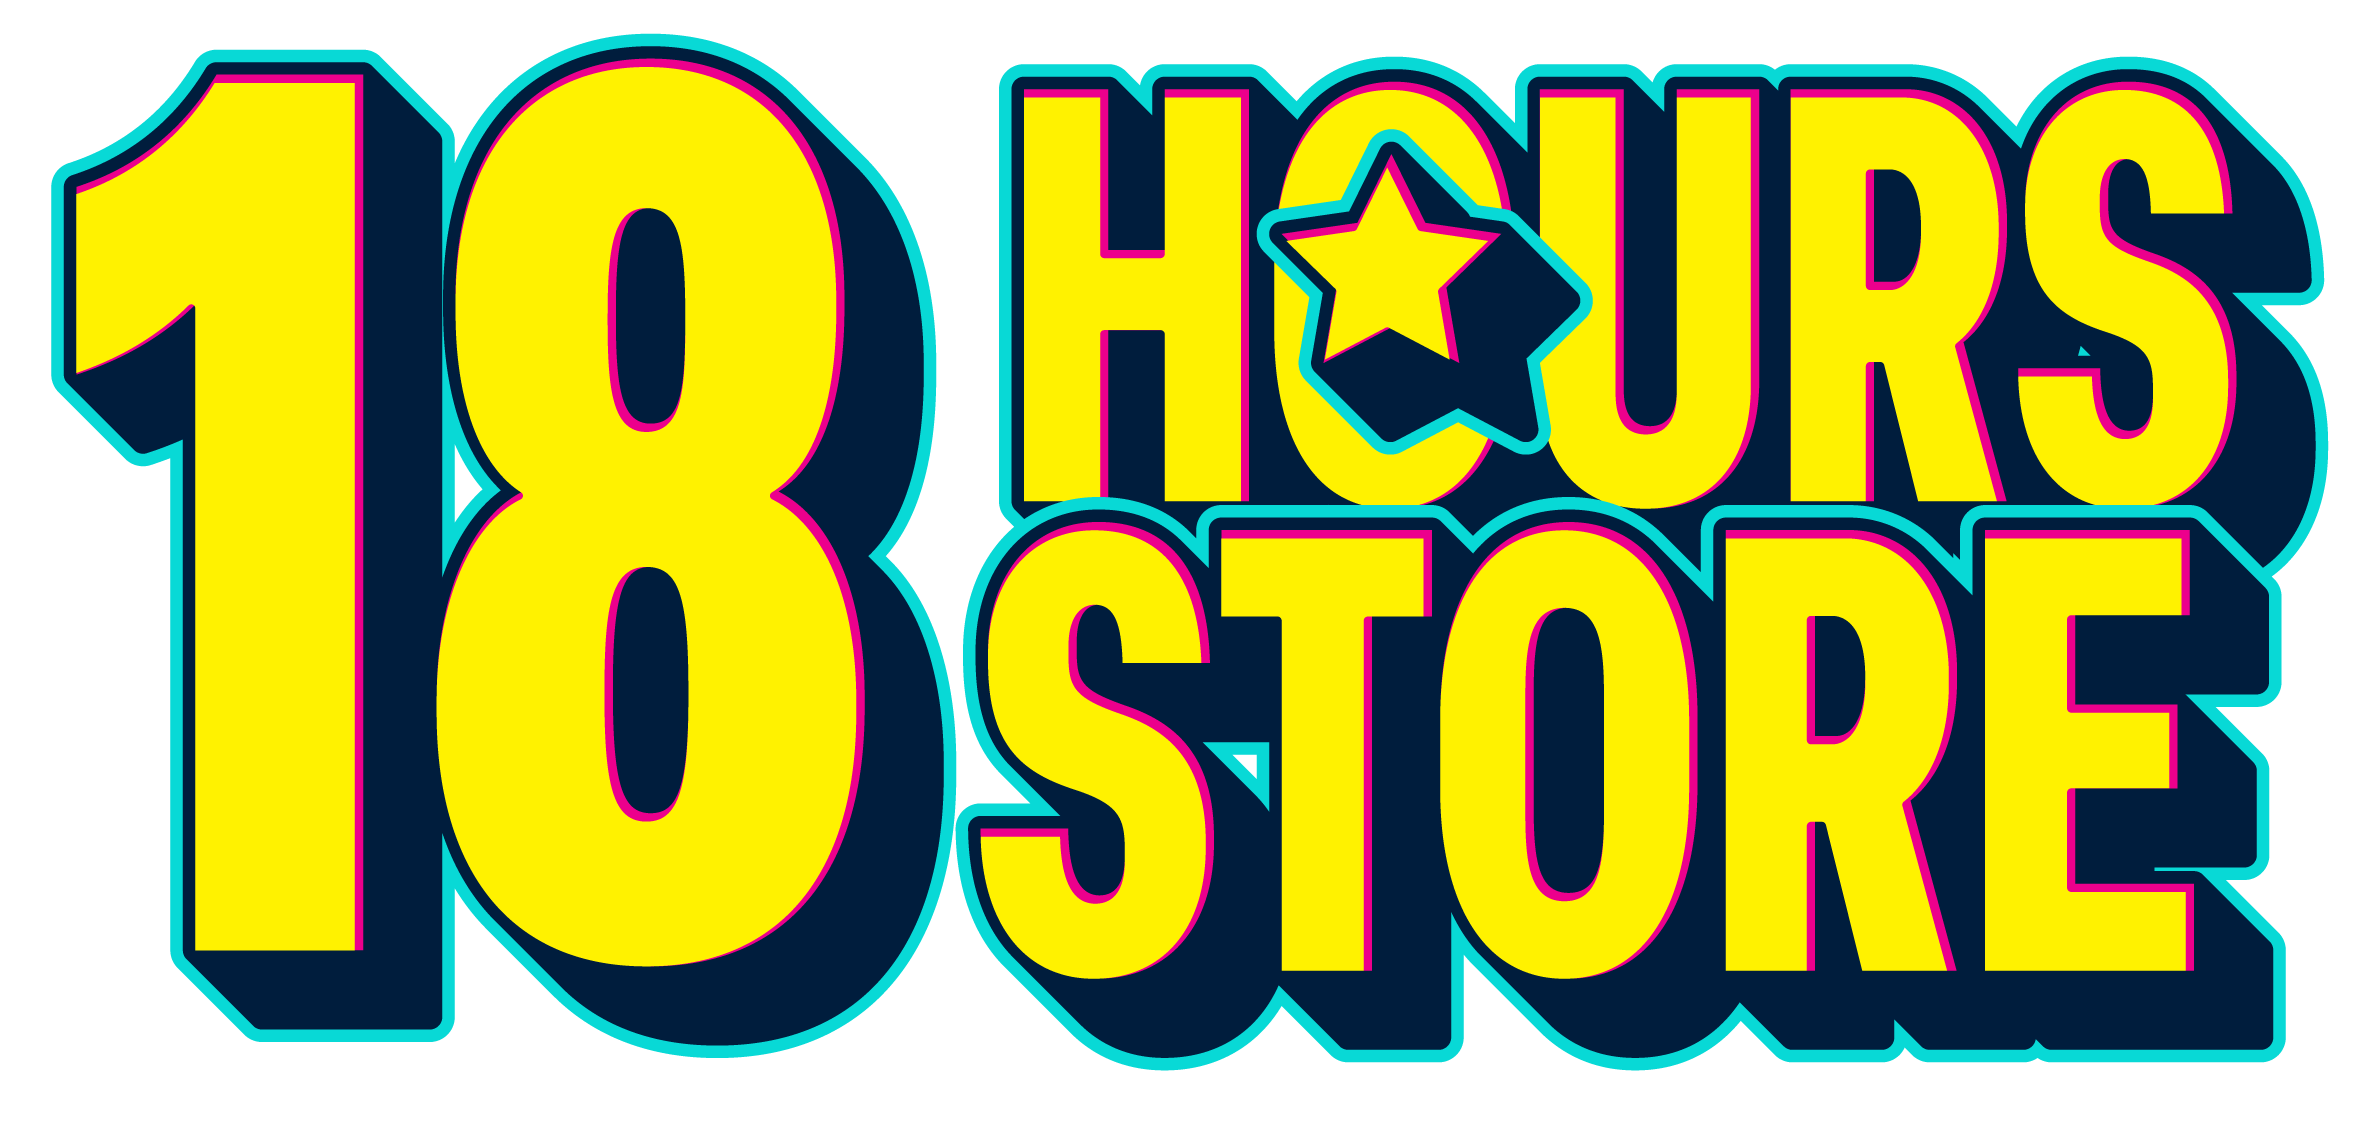 18 Hour Sale Logo